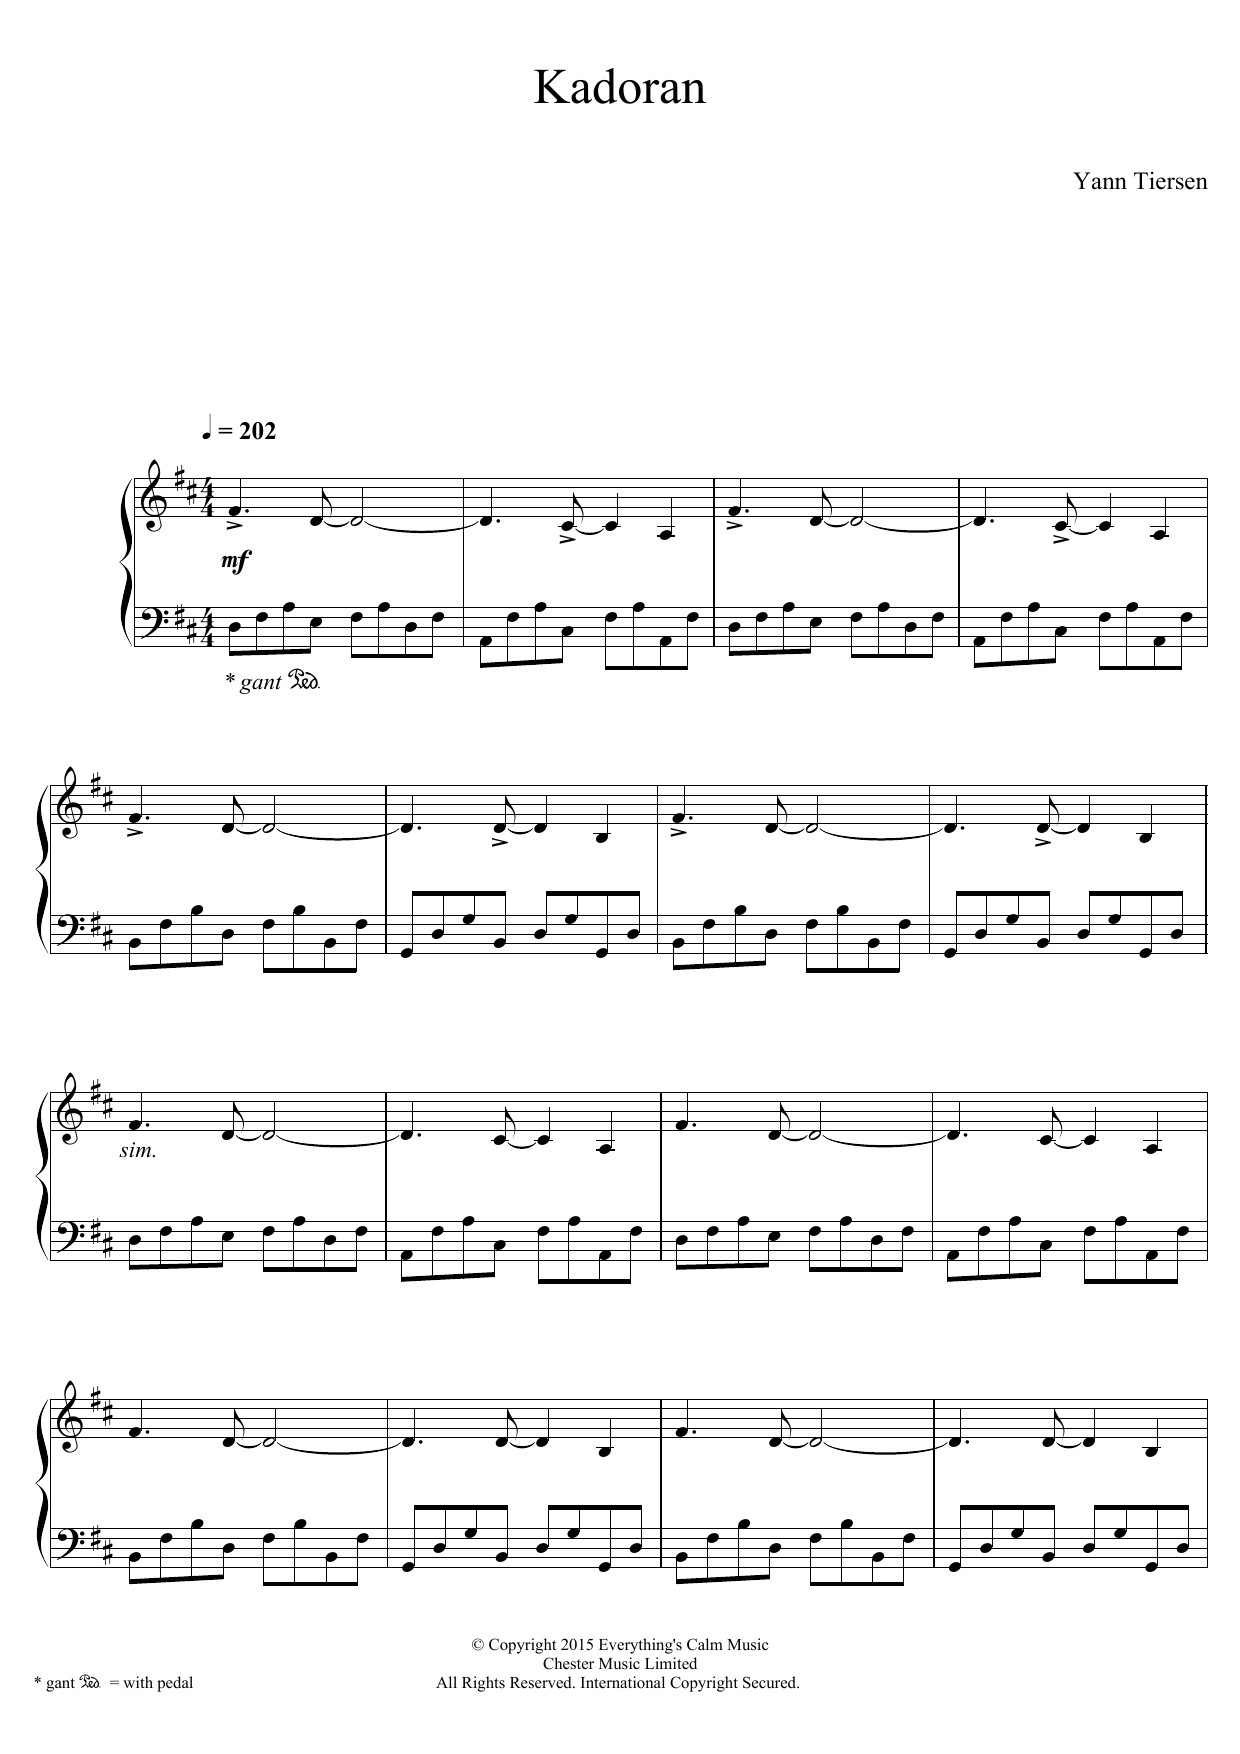 Yann Tiersen Kadoran Sheet Music Notes & Chords for Piano - Download or Print PDF